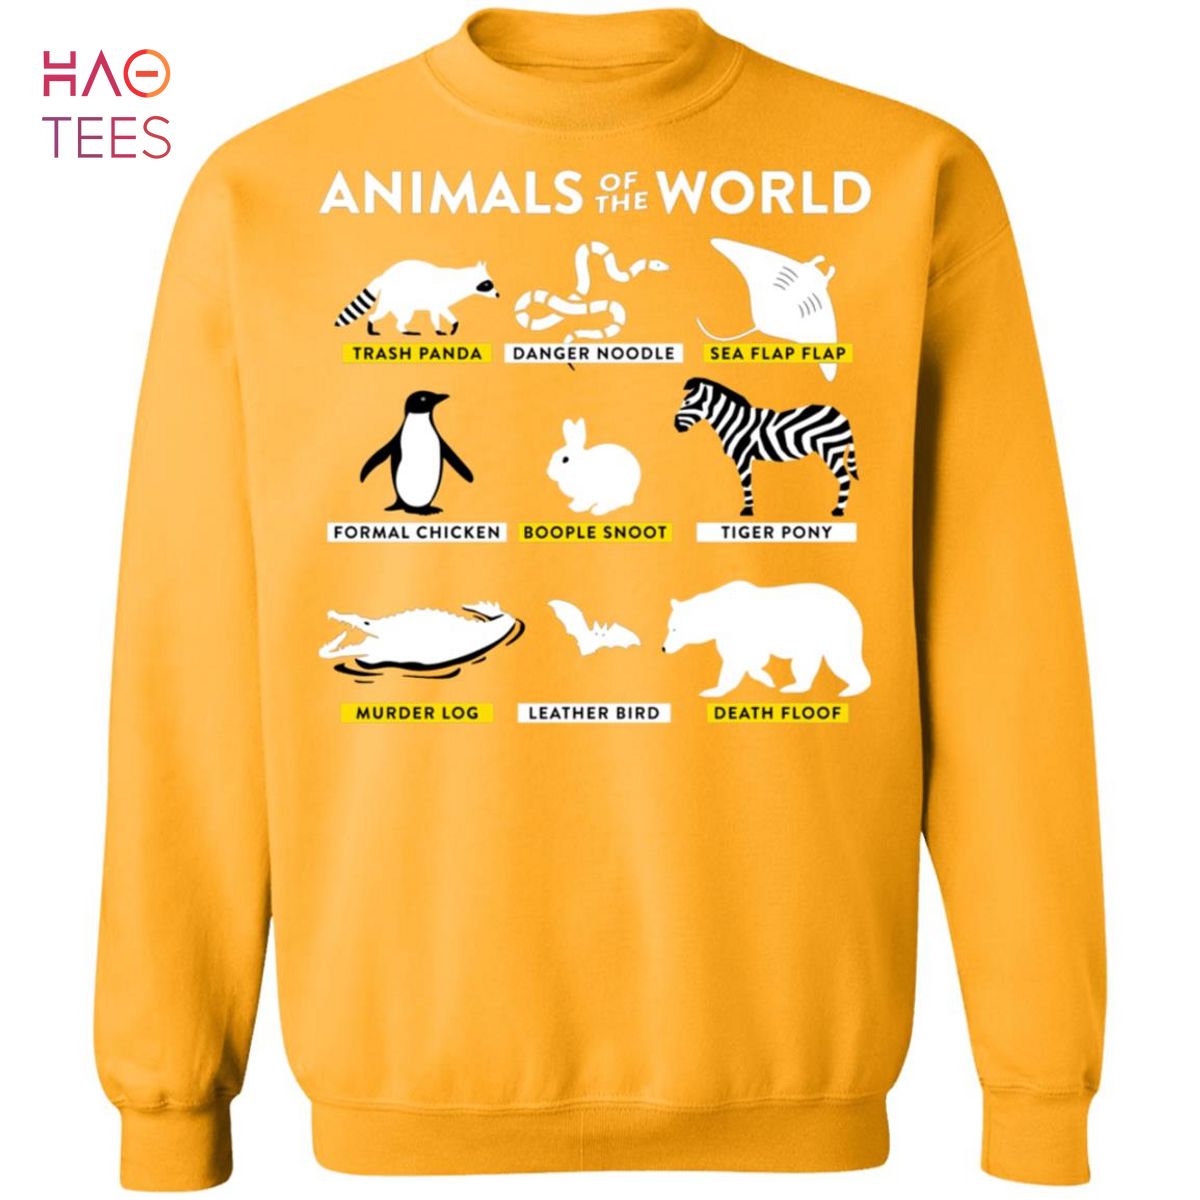 BEST Animals Of The World Sweater